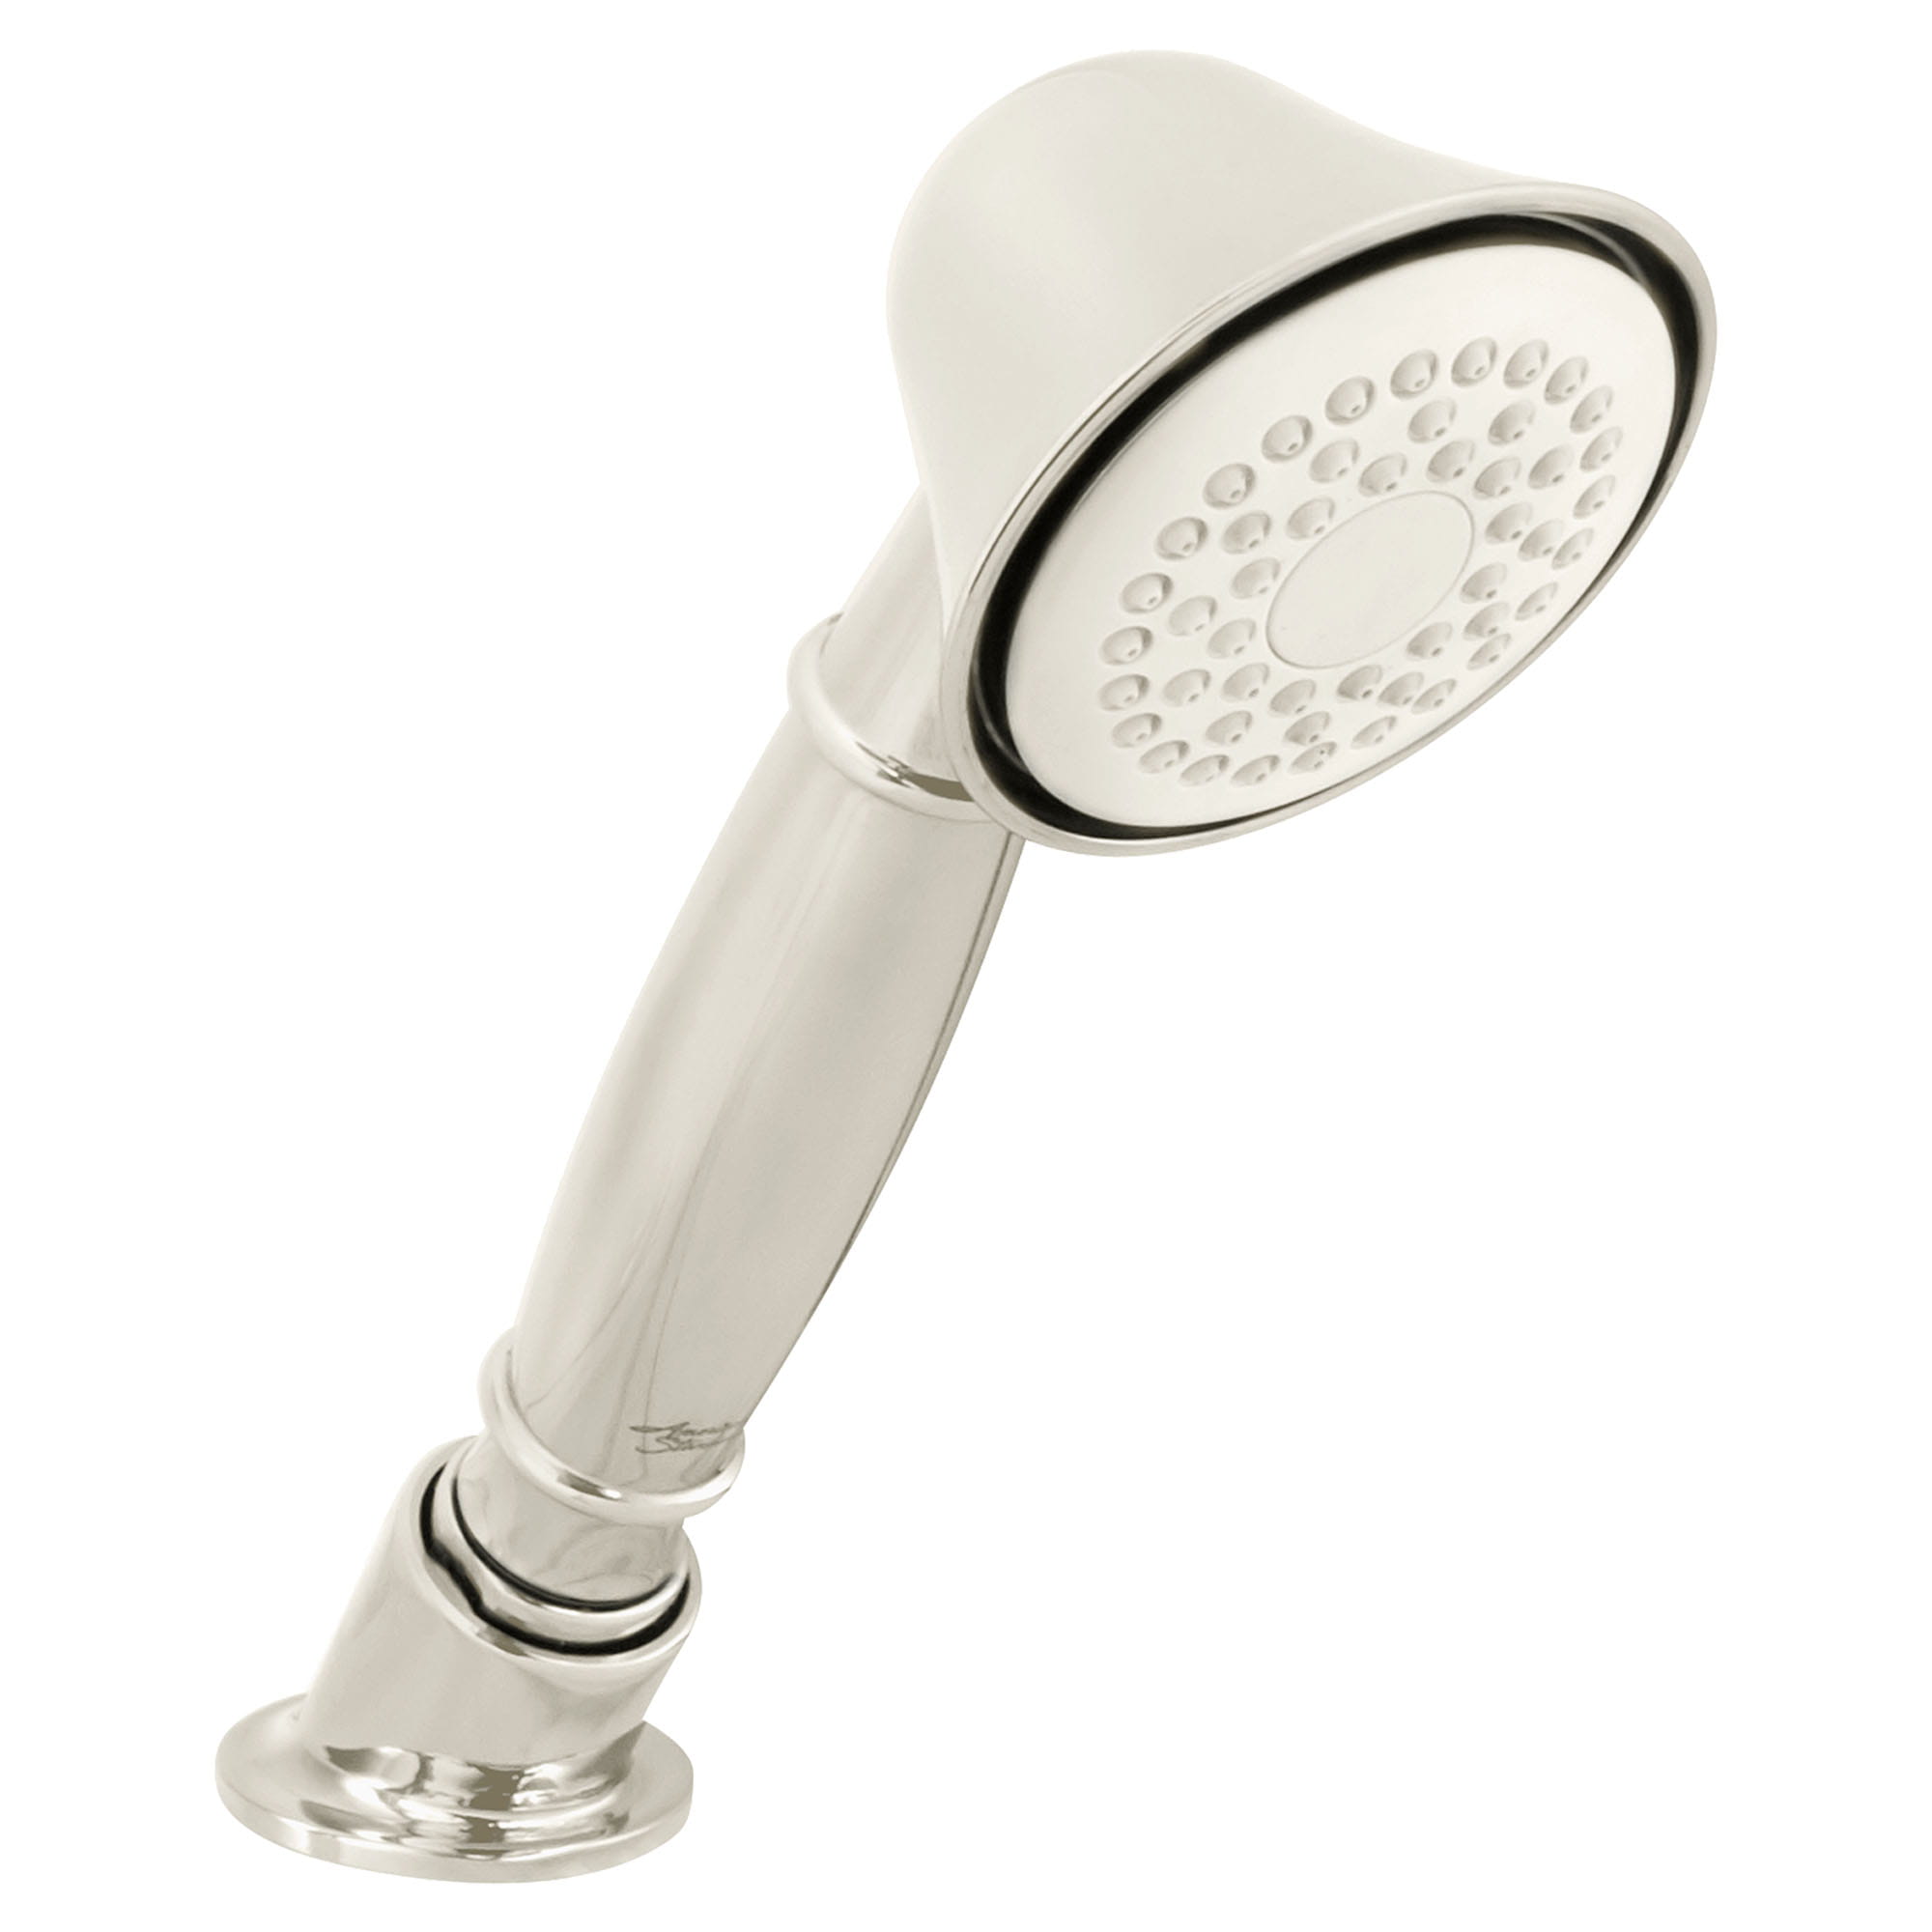 Delancey® 1.8 gpm/6.8 L/min Single Function Water-Saving Hand Shower